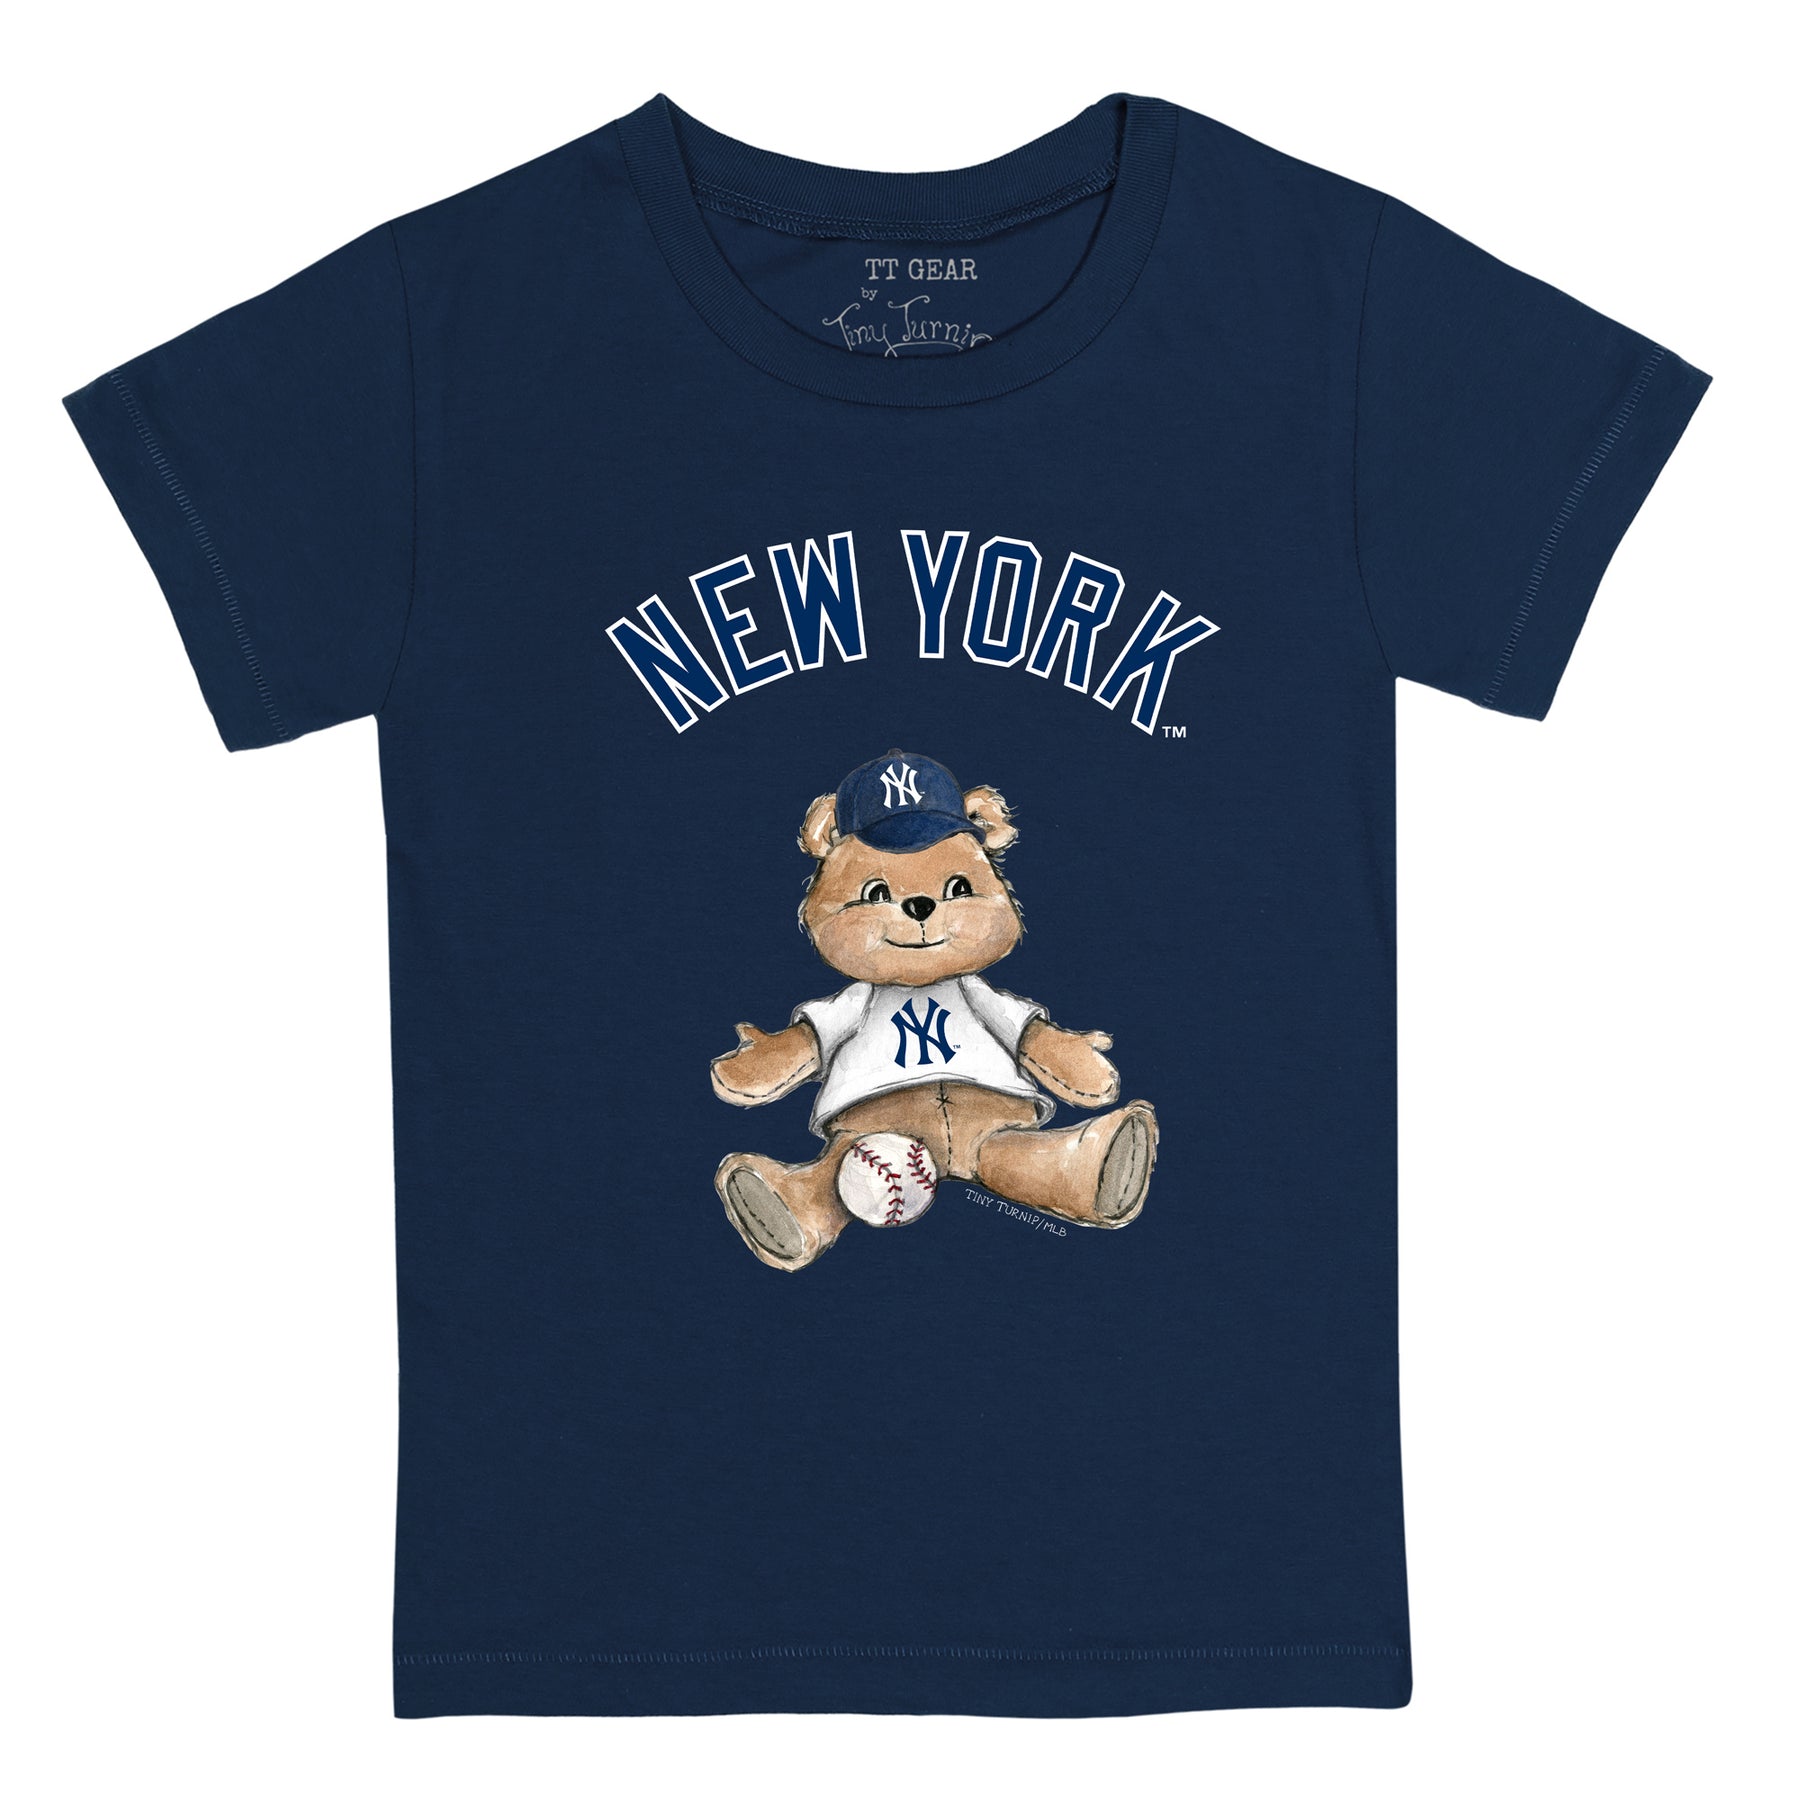 Los Angeles Dodgers Tiny Turnip Infant Teddy Boy T-Shirt - White